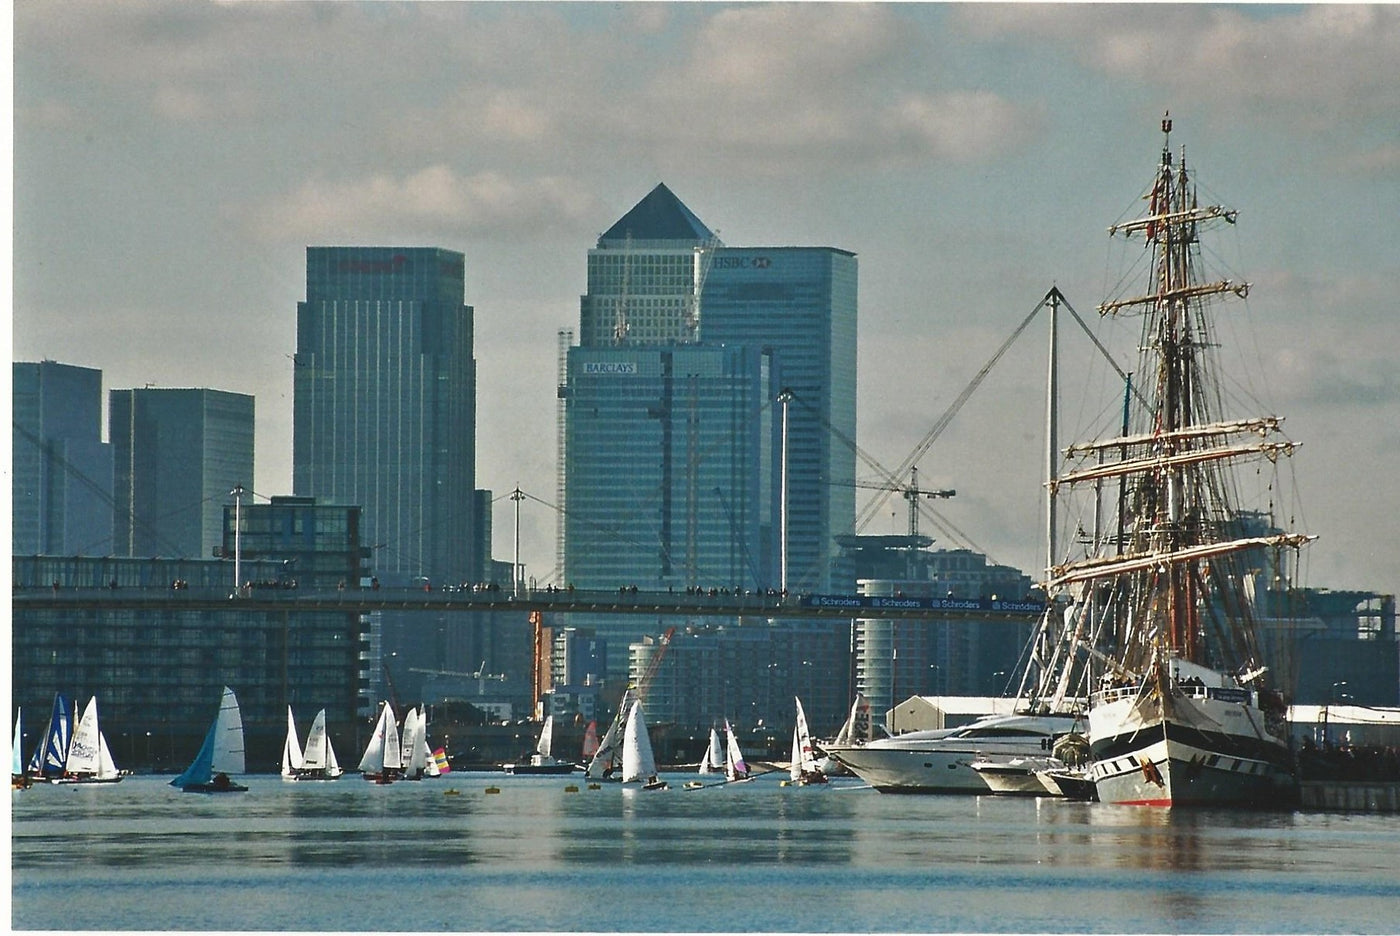 Victoria Dock Sailing Club Canary Wharf ExCel photograph